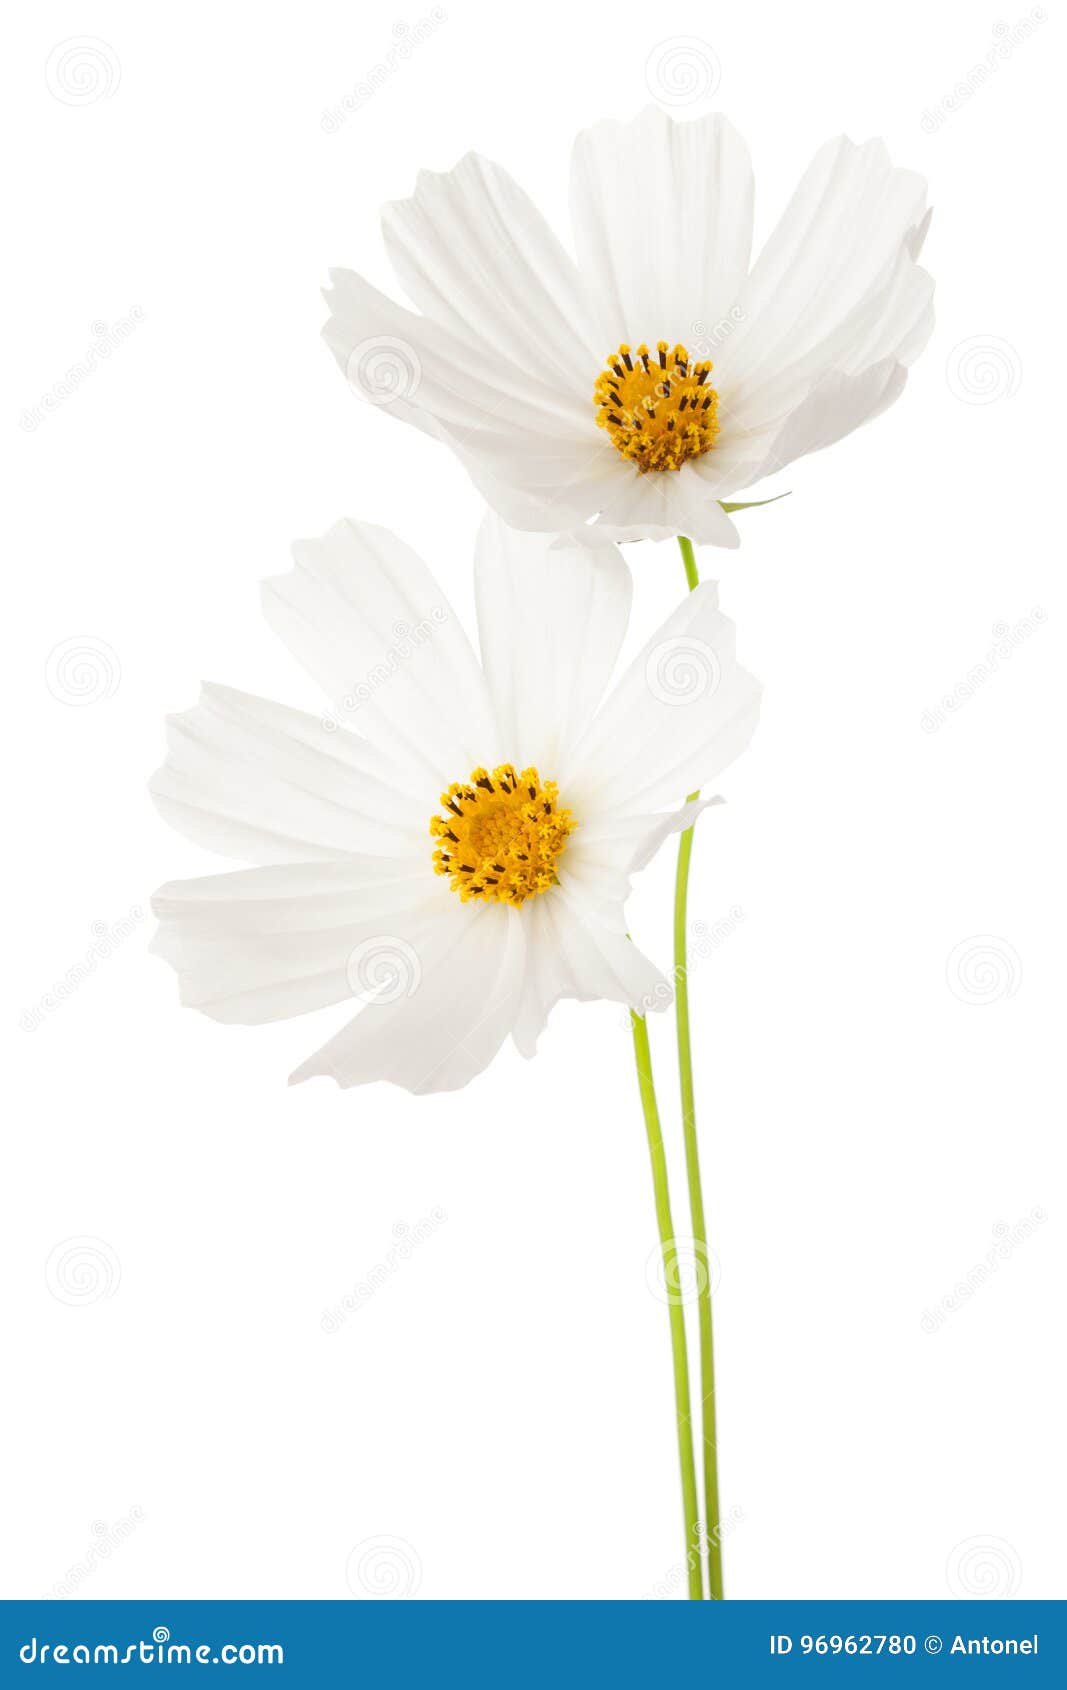 two white cosmos flowers  on white background. garden cosmos